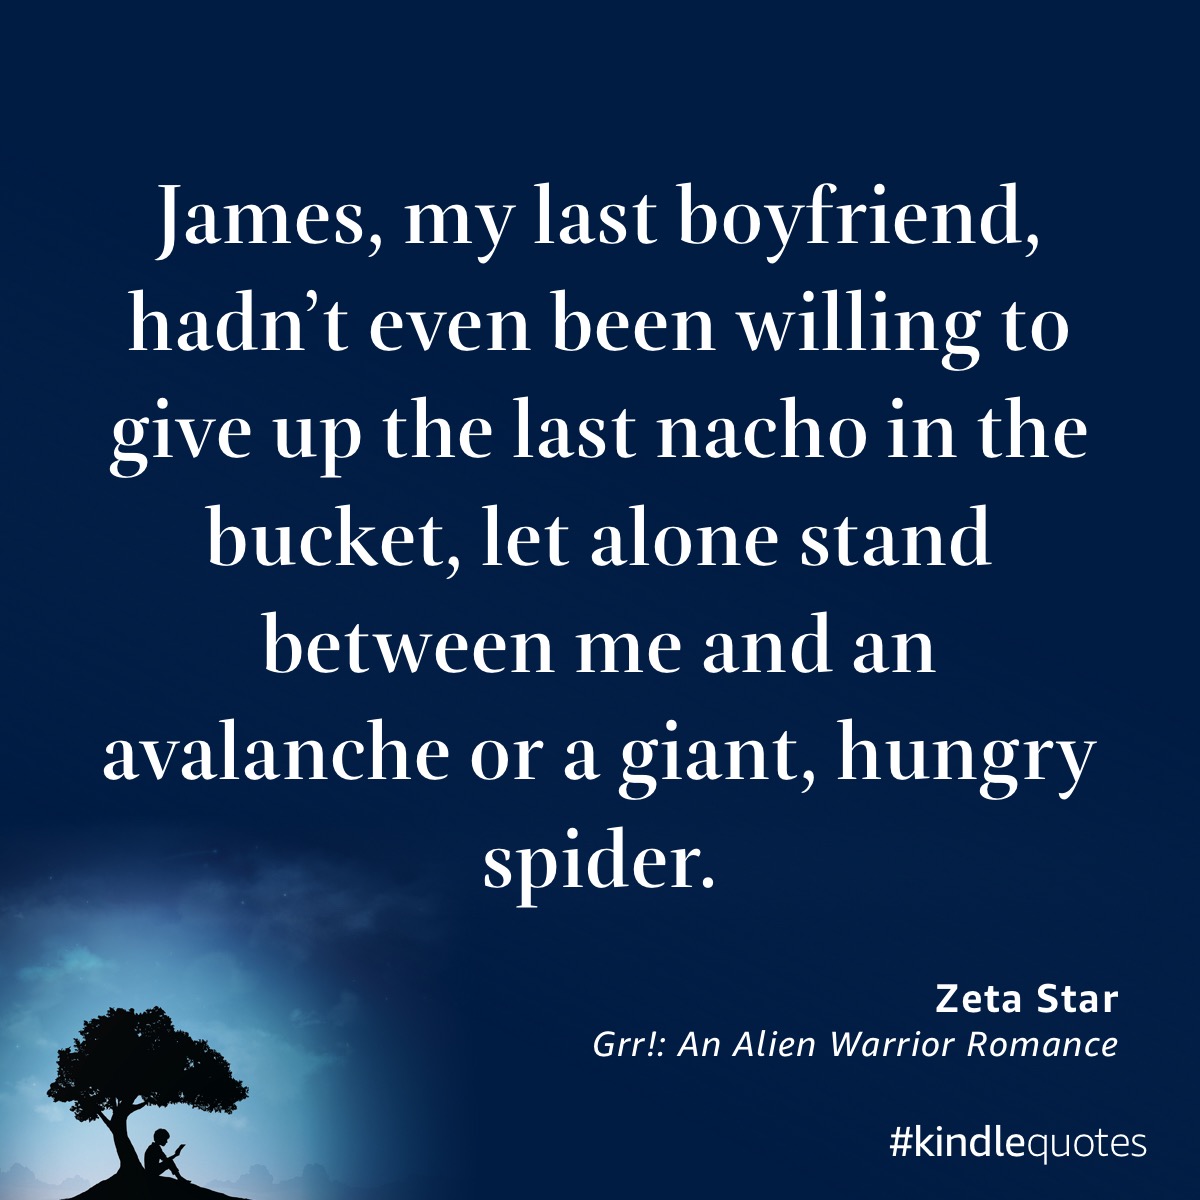 Book quote Zeta Star